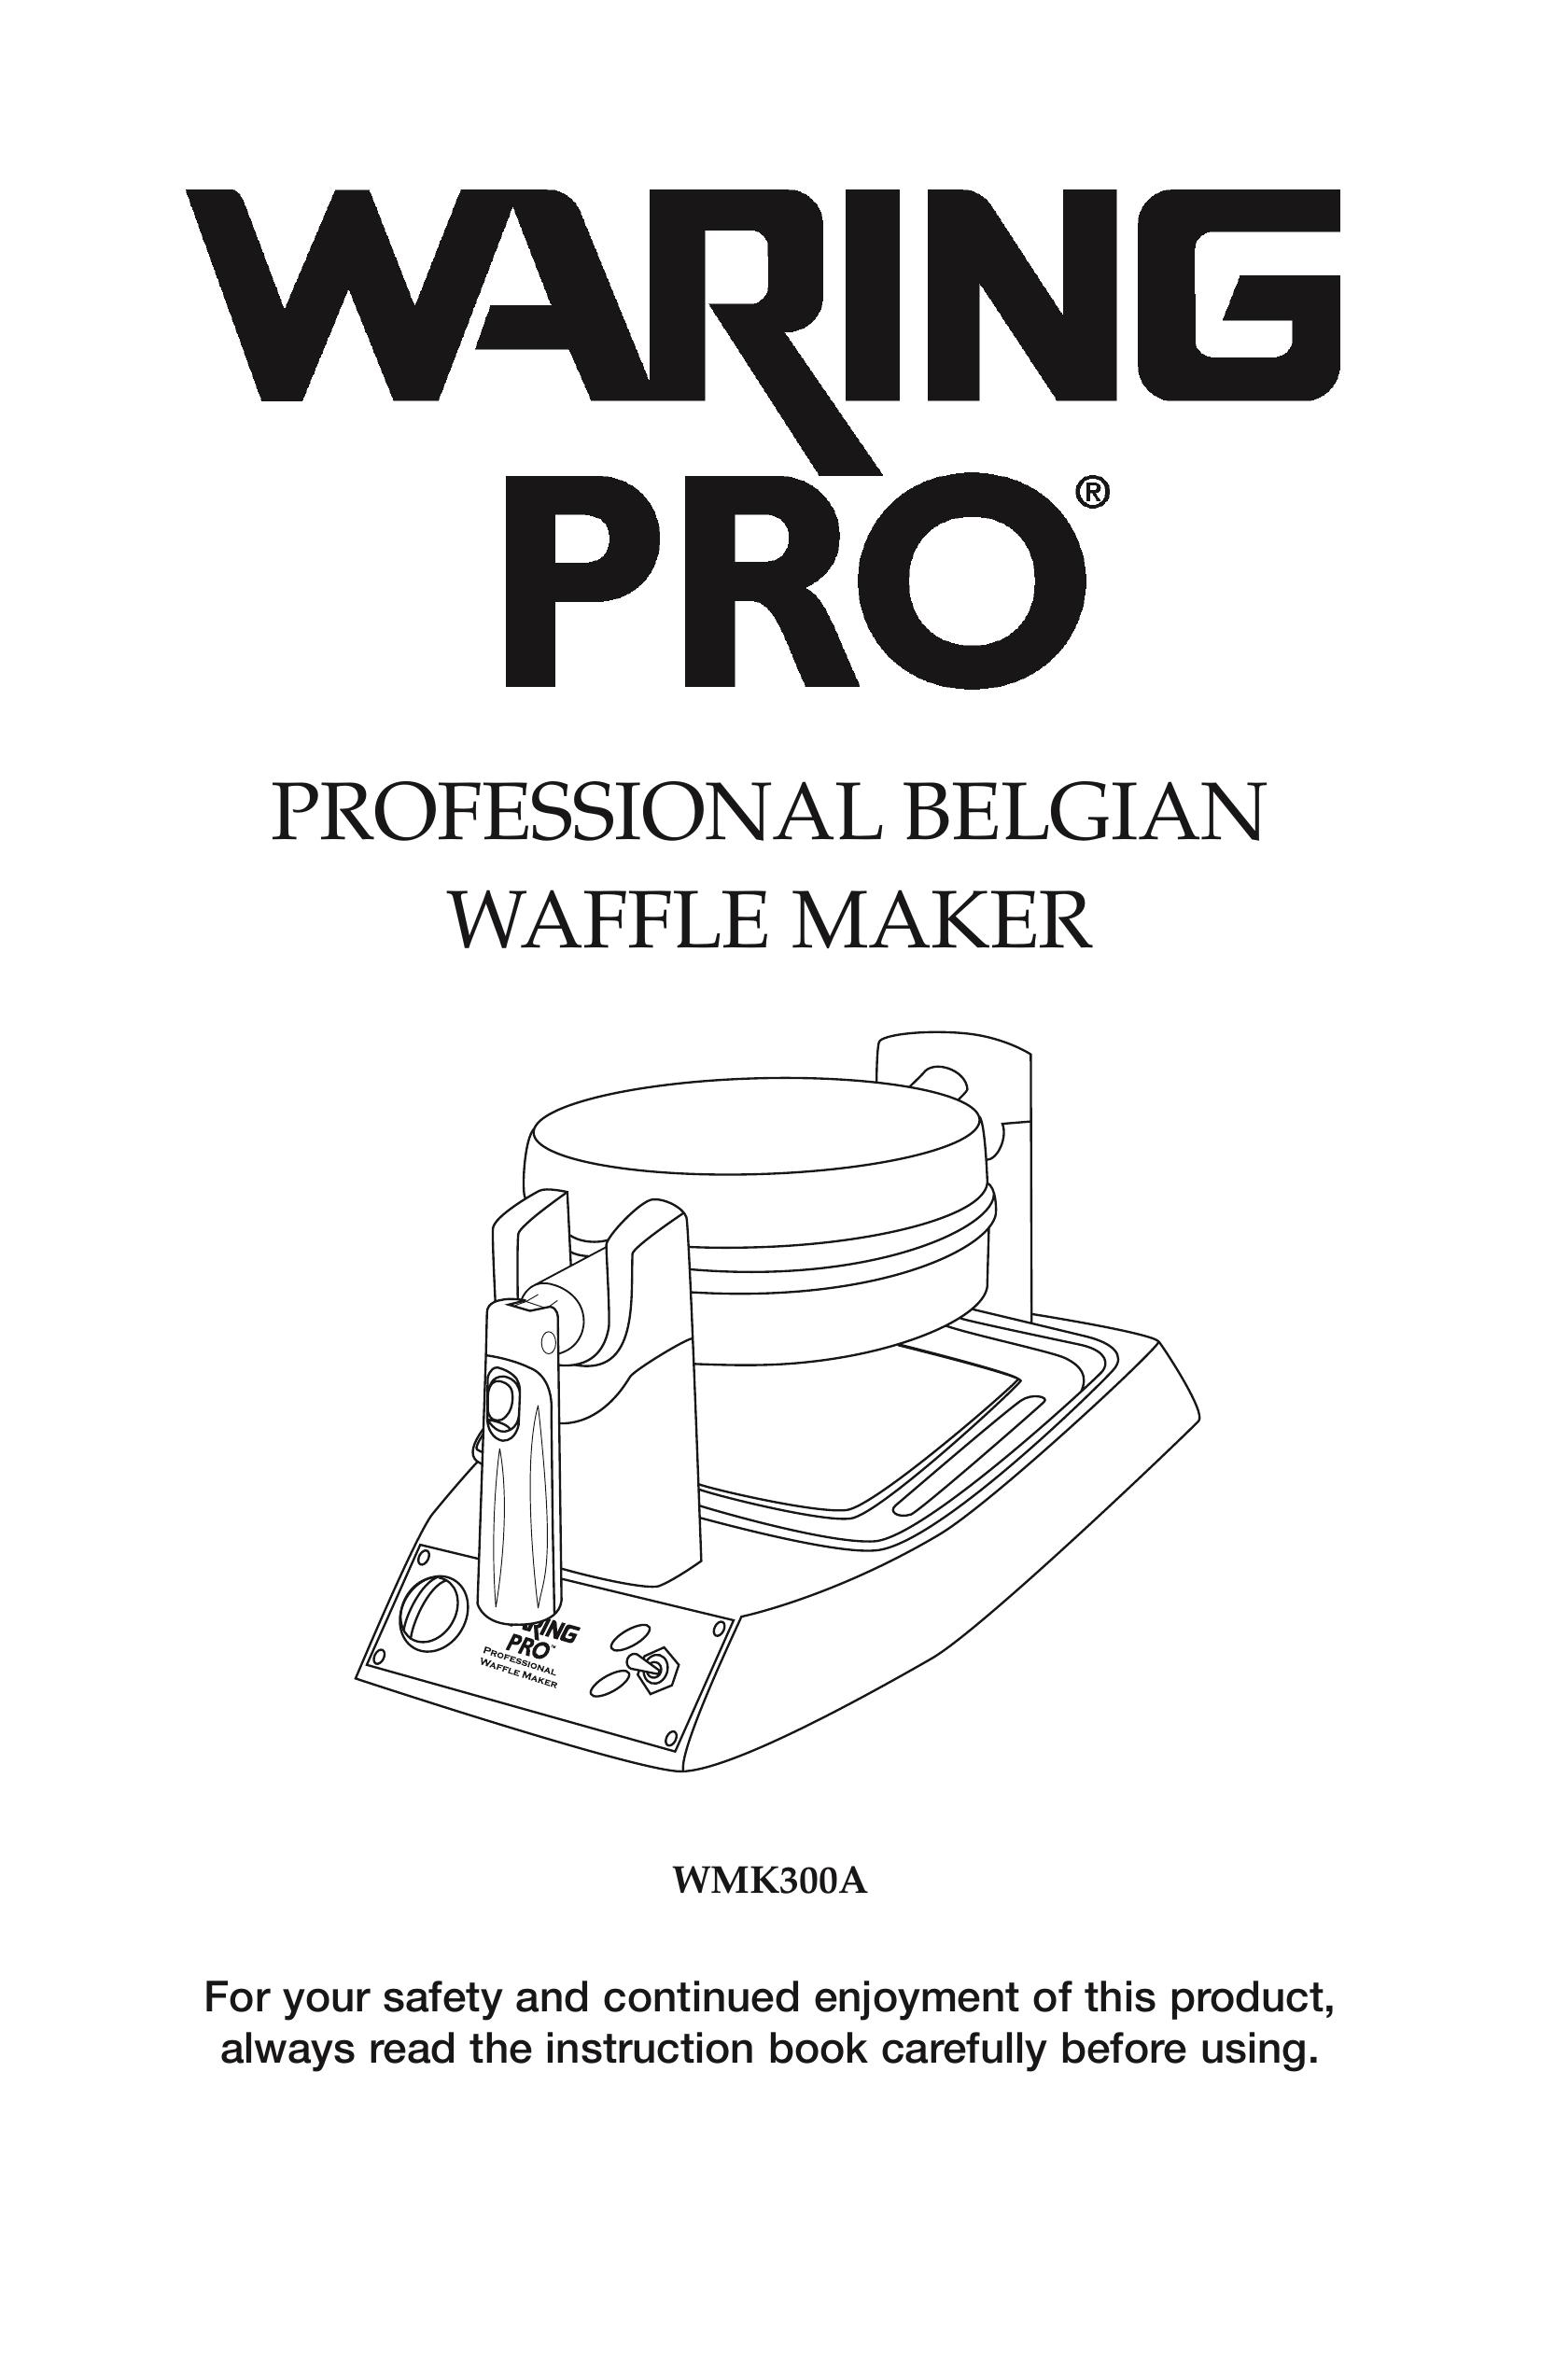 Waring WMK300A Waffle Iron User Manual